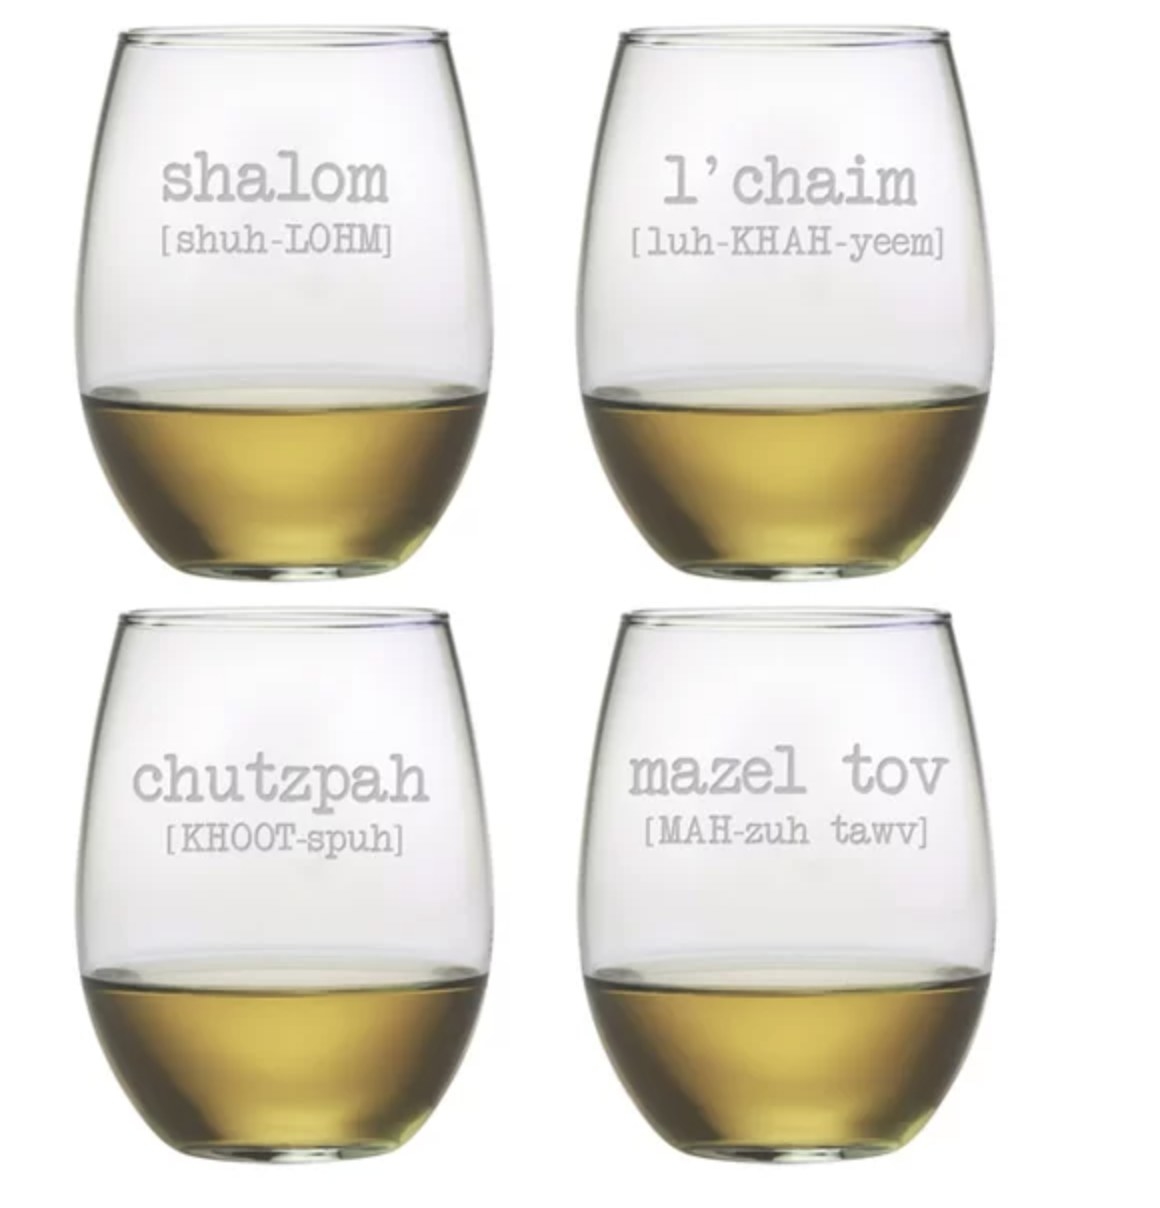 The glasses say &quot;shalom,&quot; &quot;i&#x27;chaim,&quot; &quot;chutzpah&quot; and &quot;mazel tov&quot; with their respective pronunciations underneath